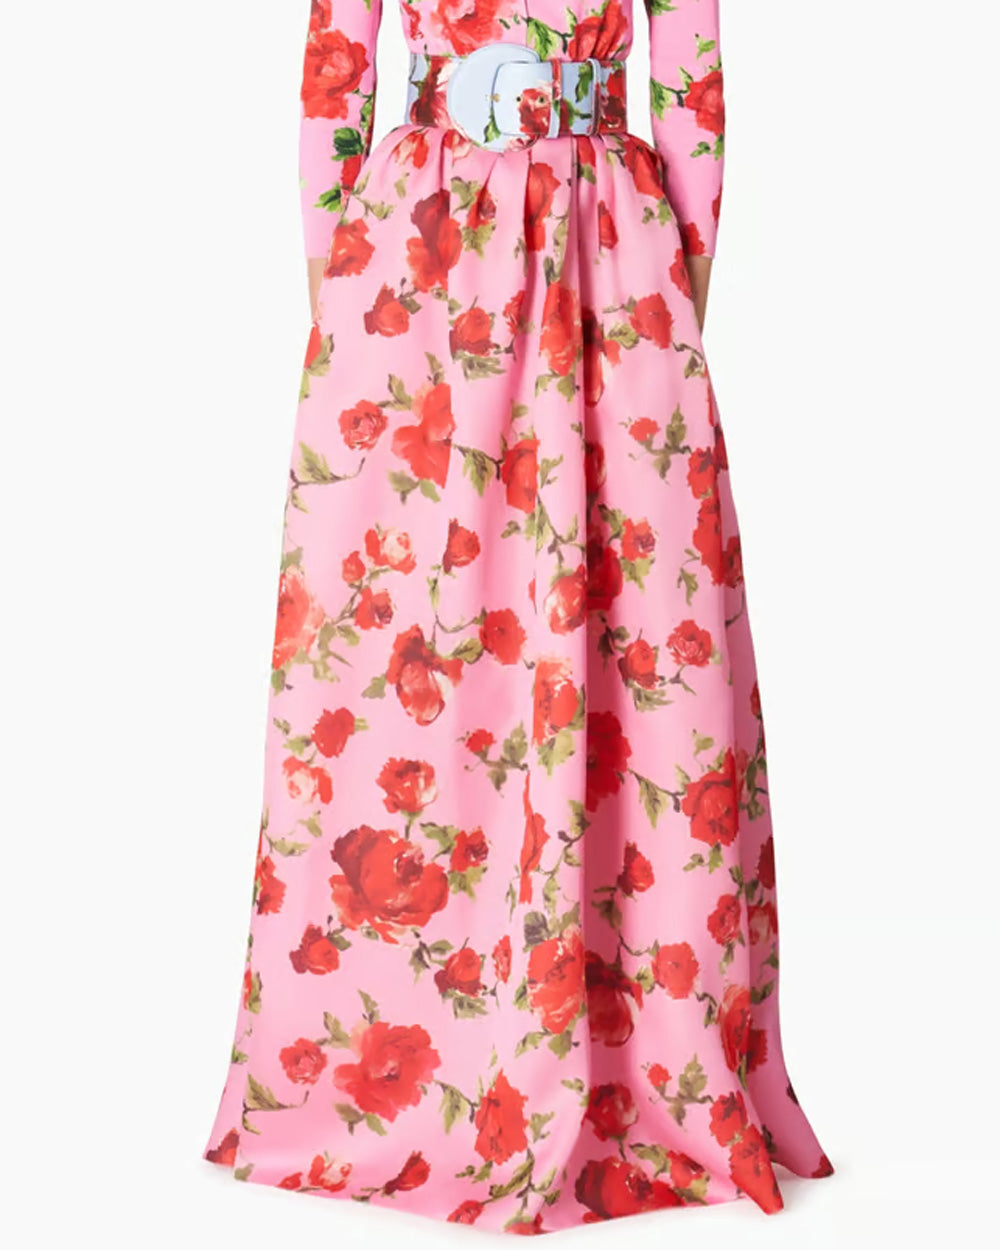 Deco Pink Floral Print Organza Ball Skirt